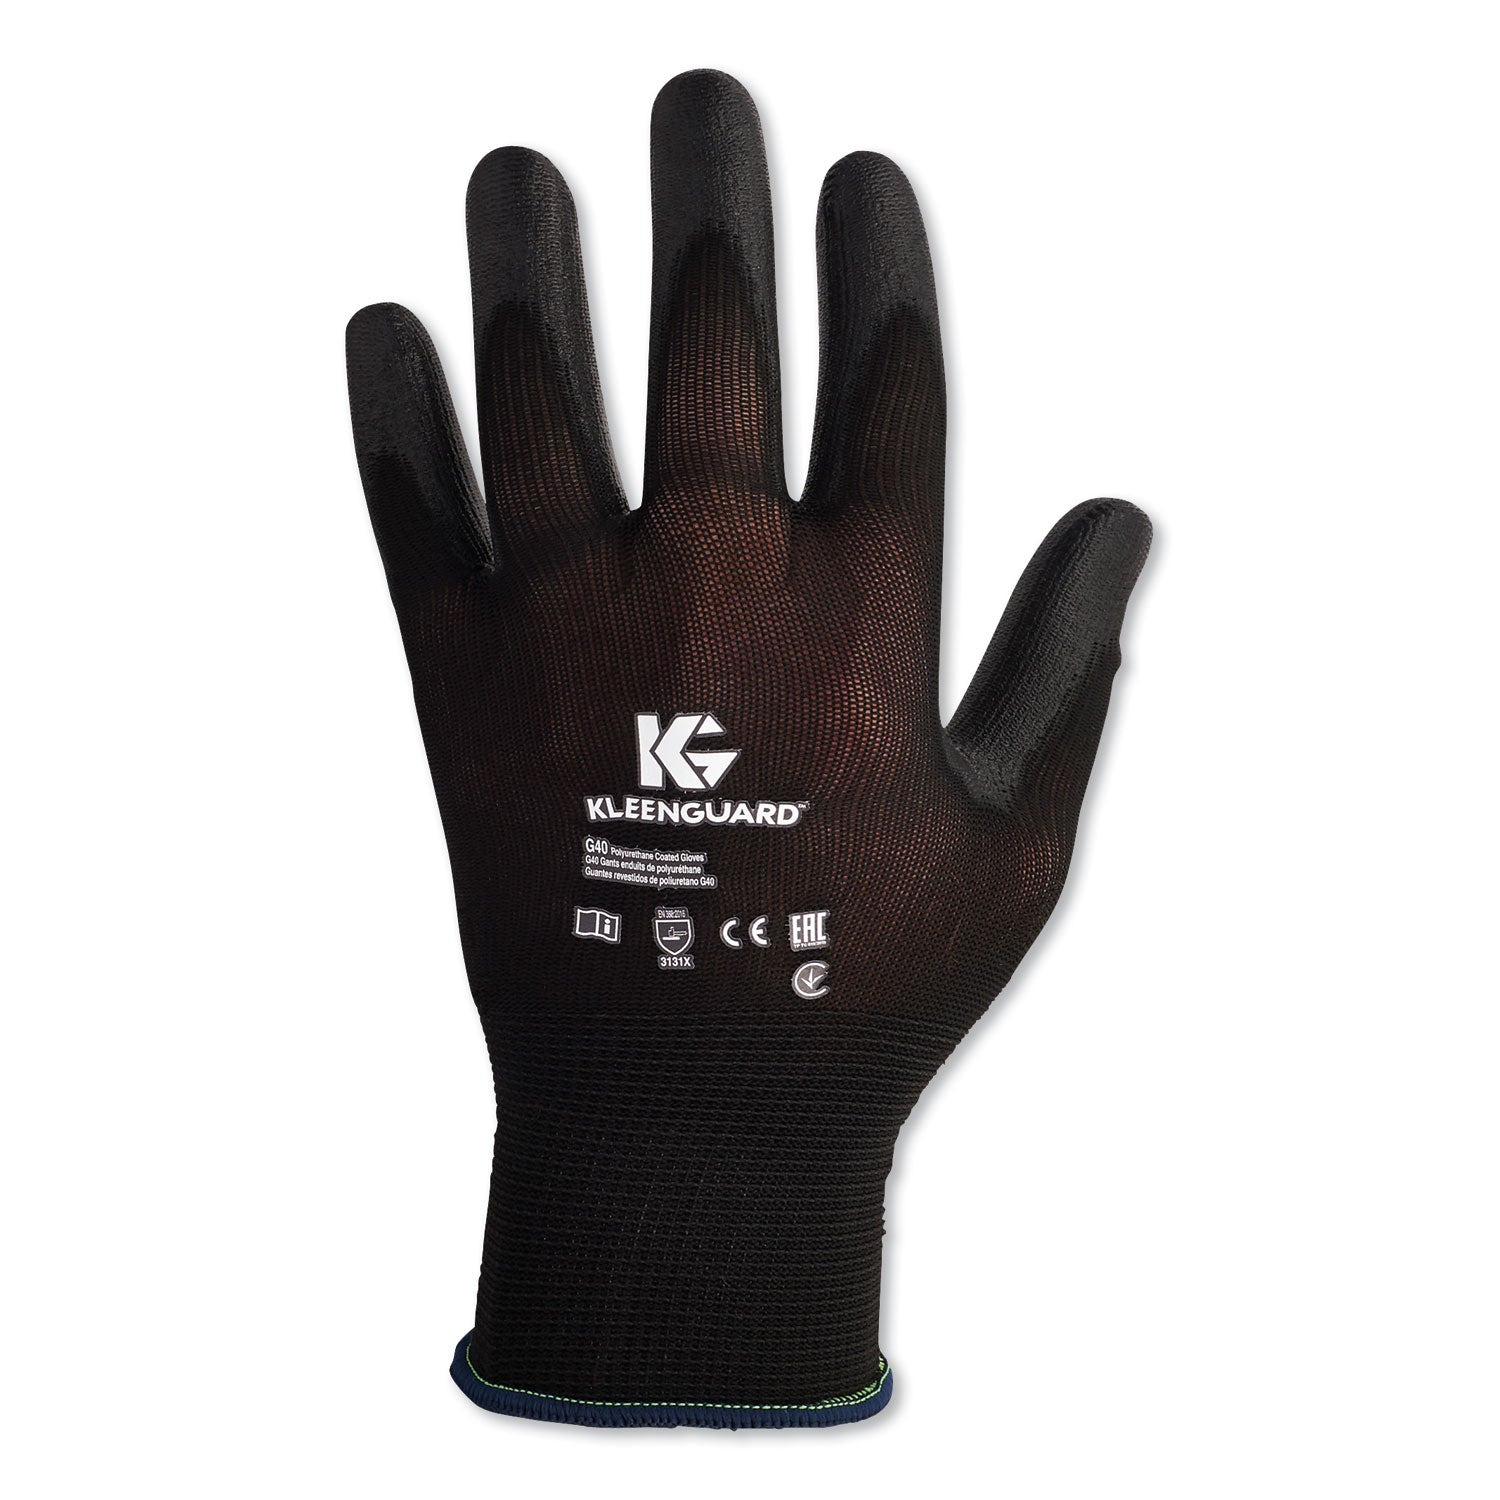 g40-polyurethane-coated-gloves-220-mm-length-small-black-60-pairs_kcc13837 - 1